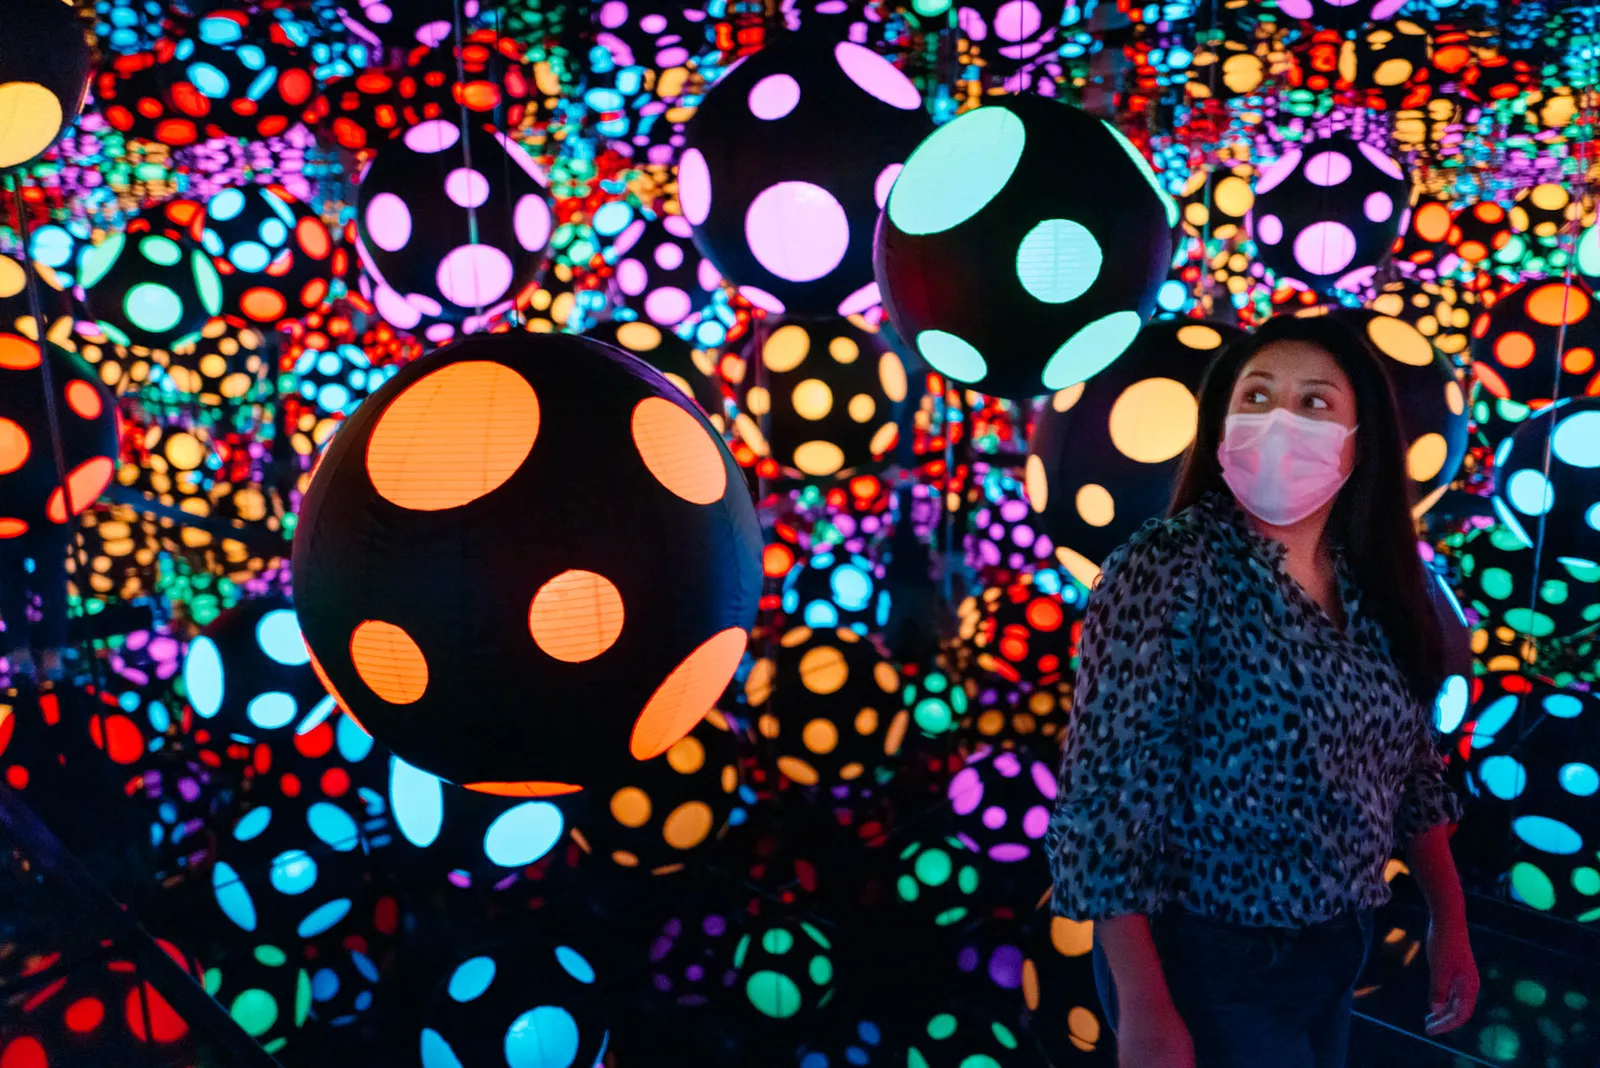 Massive Yayoi Kusama exhibit at TLV Museum of Art offers thrills and wonder